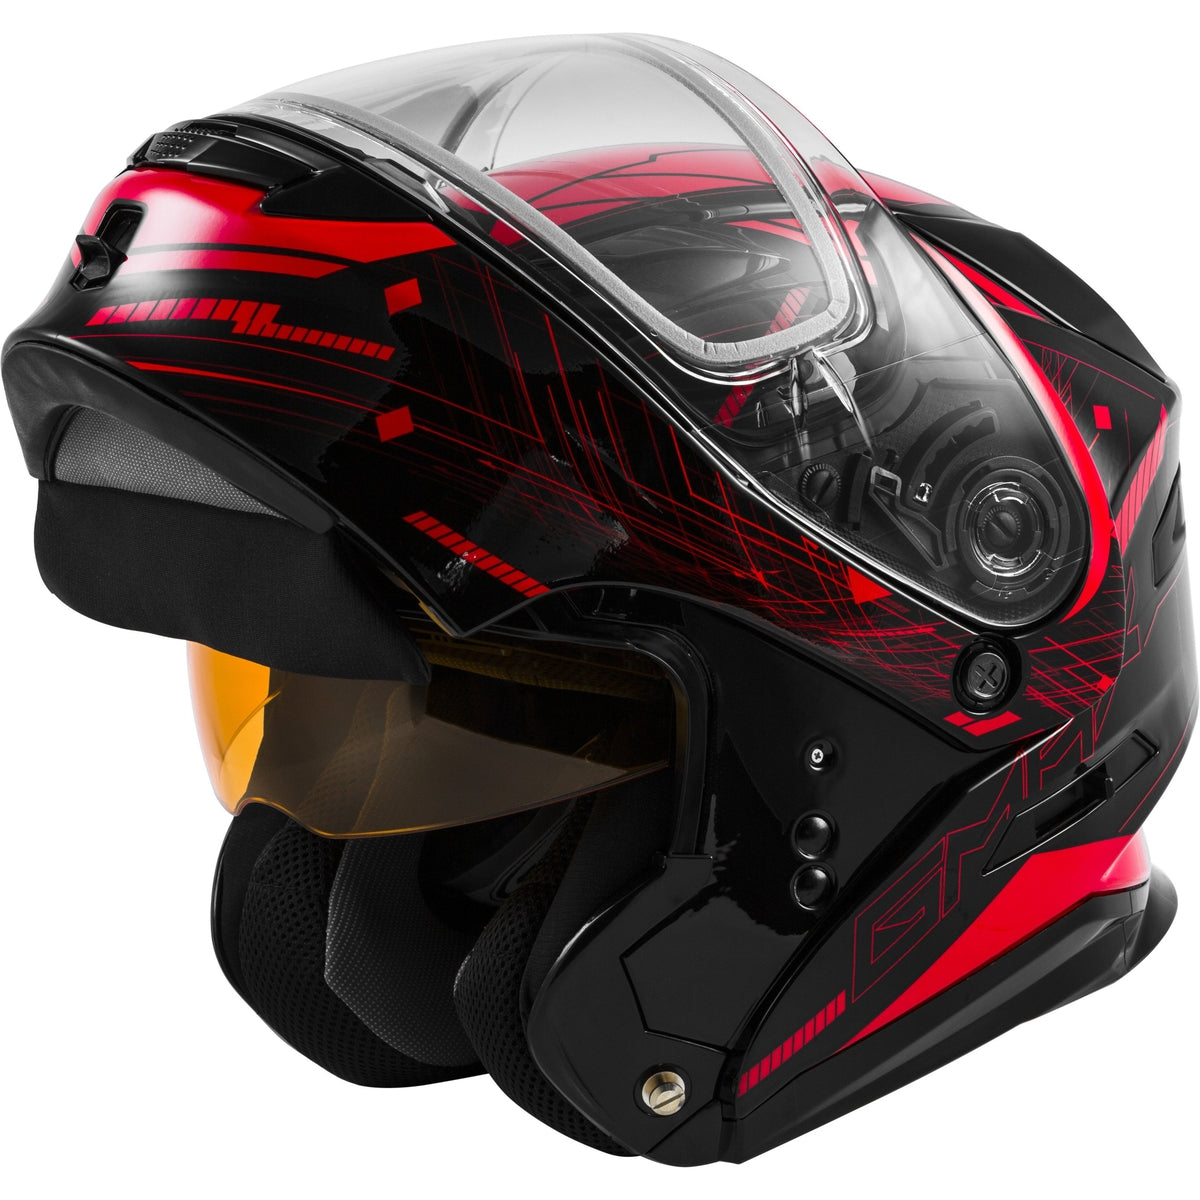 GMax MD01 Modular Helmet with Dual Lens Shield